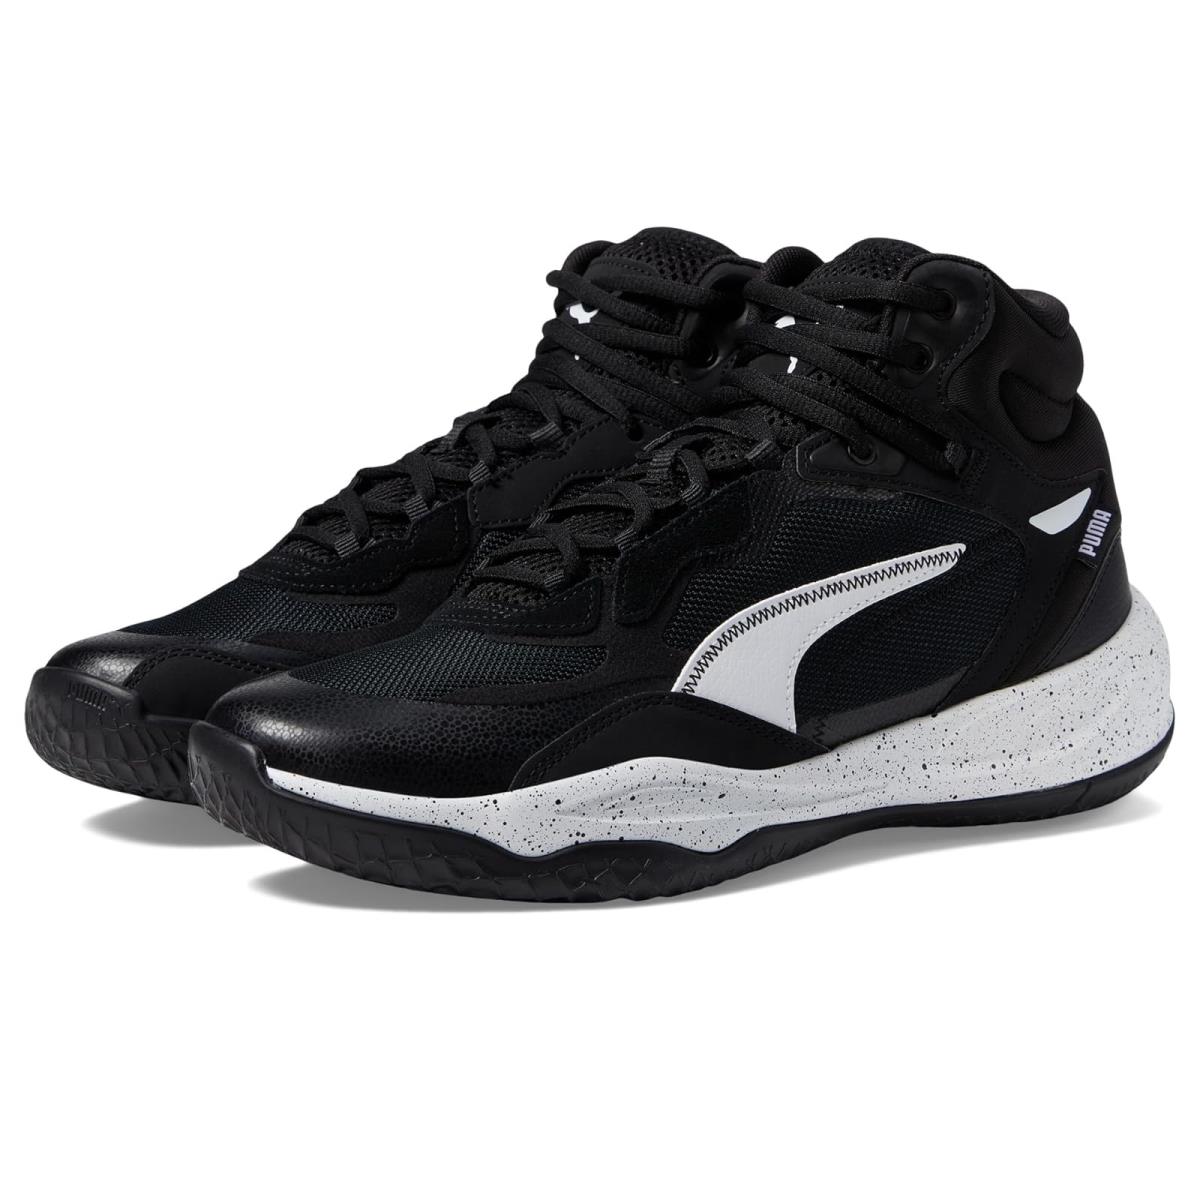 Man`s Sneakers Athletic Shoes Puma Playmaker Pro Mid Splatter Puma Black/Puma White